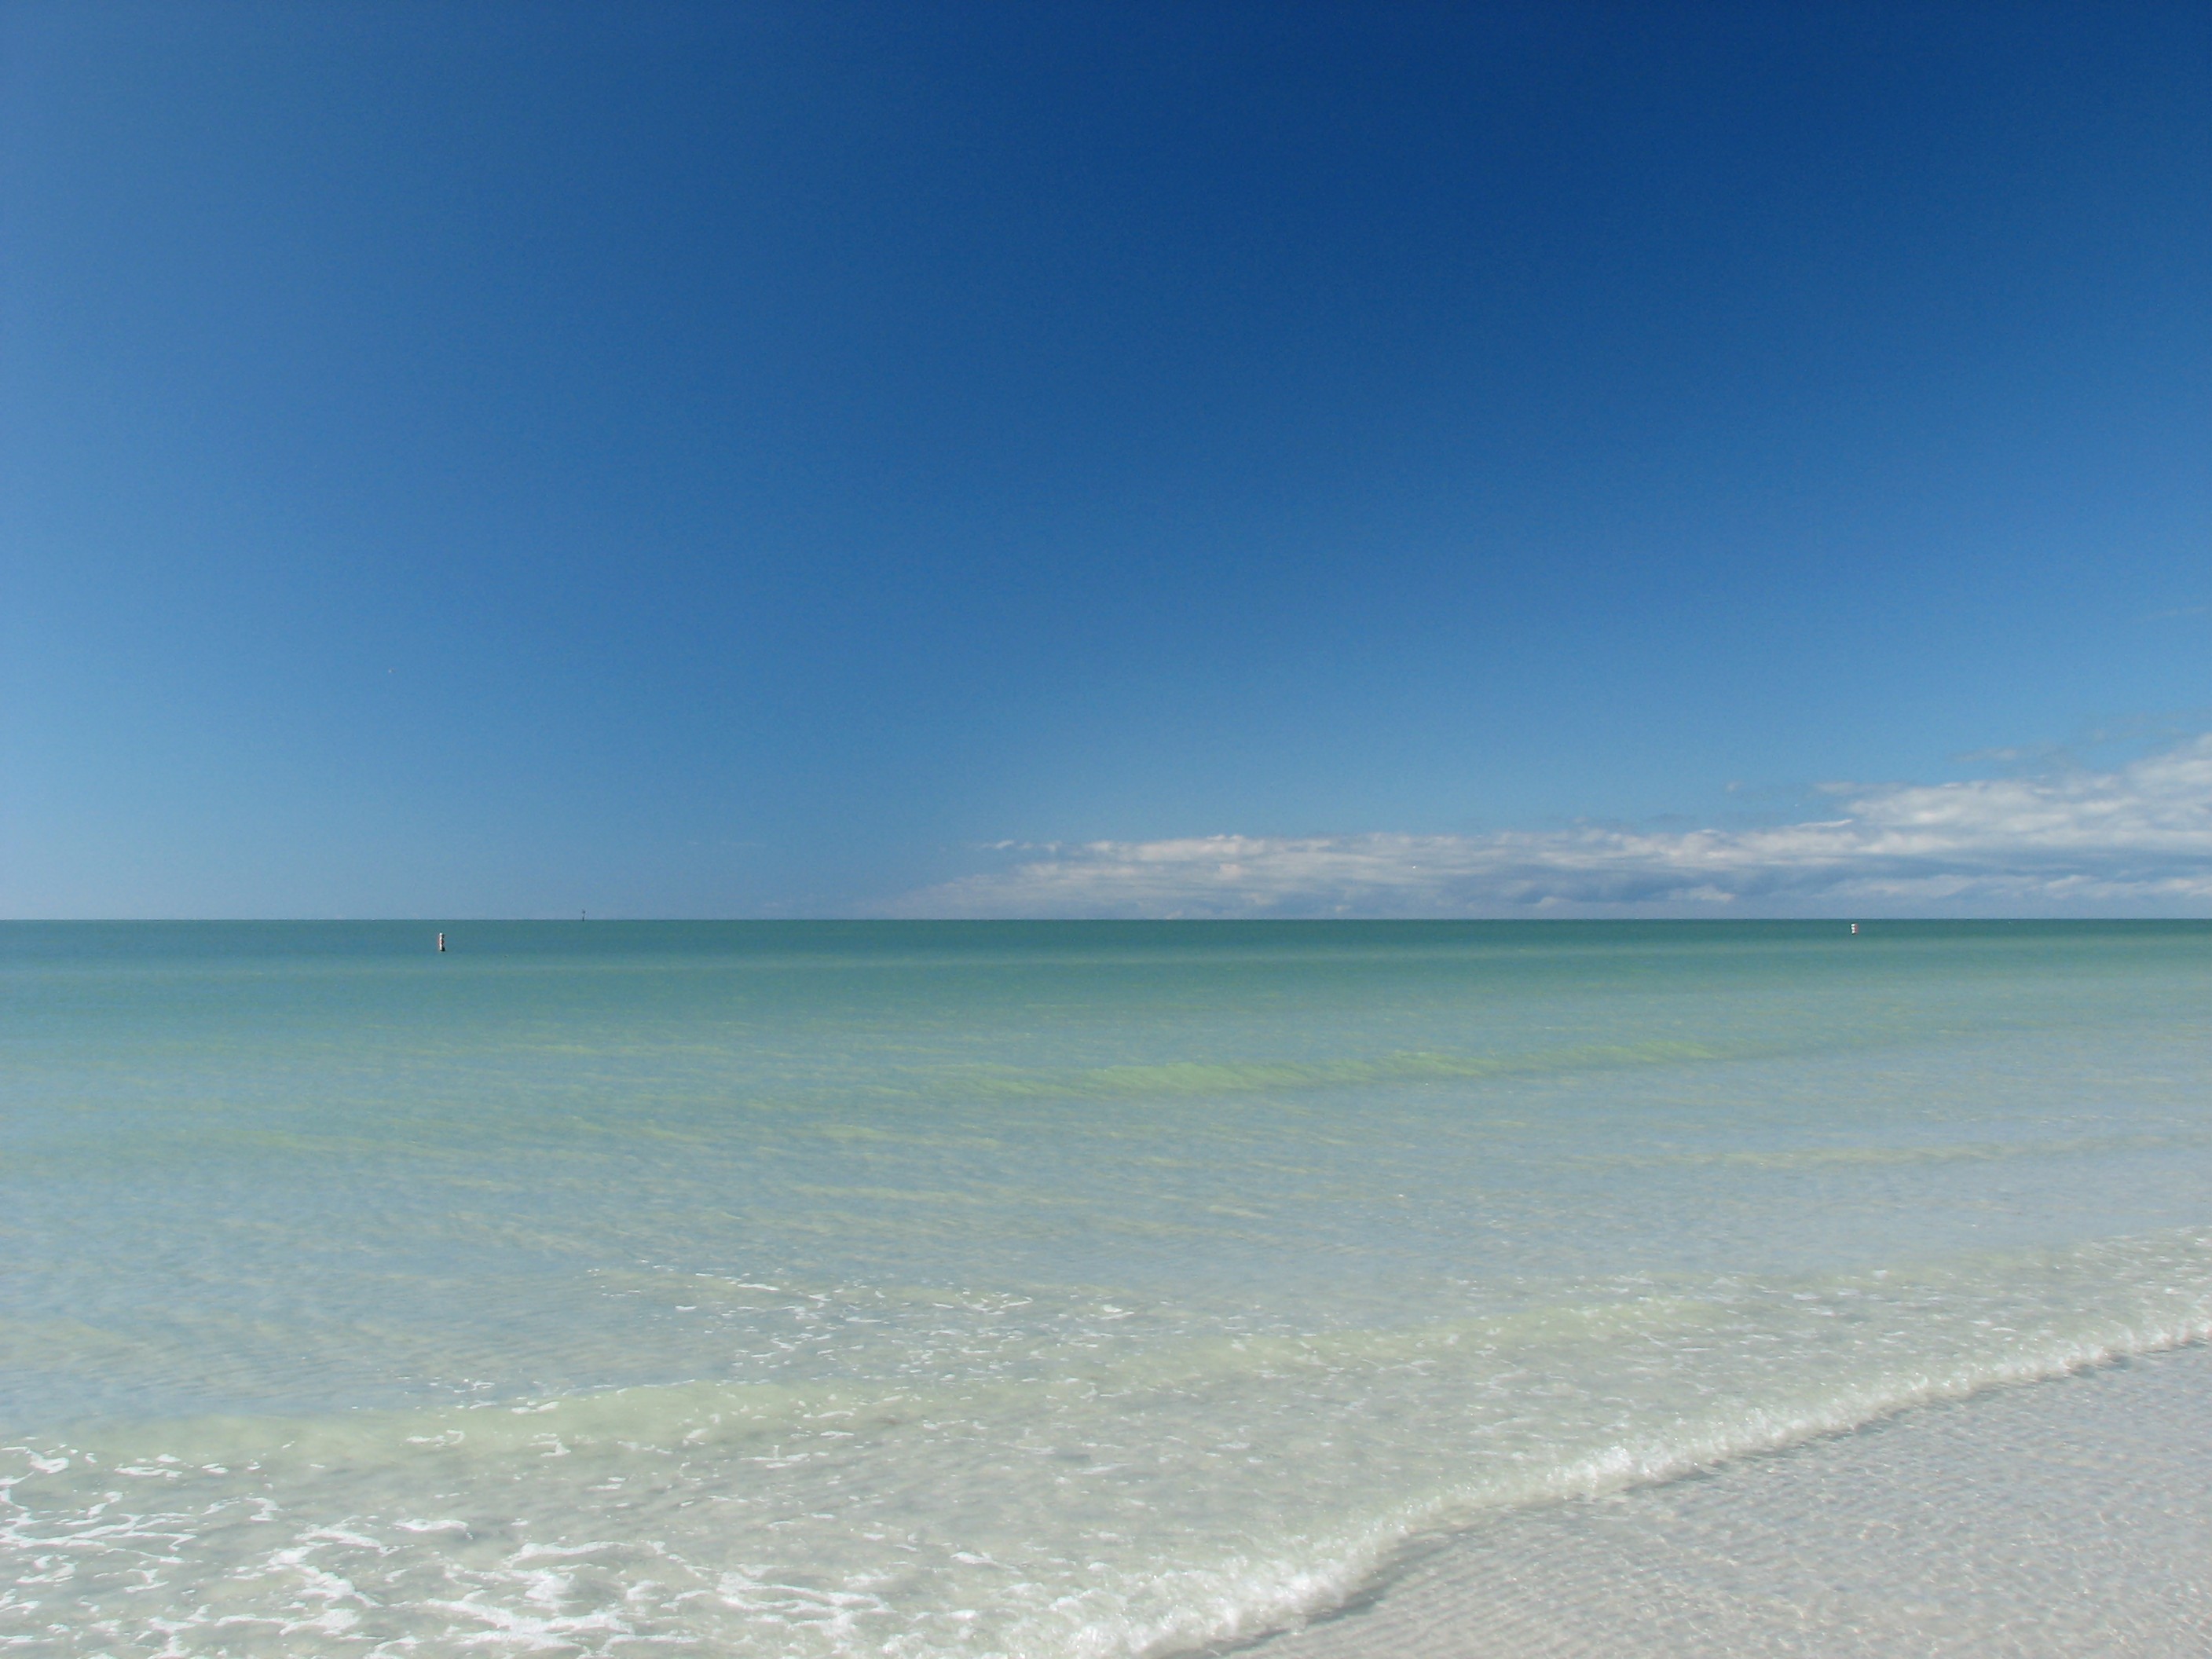 An ocean and beach landscape photo